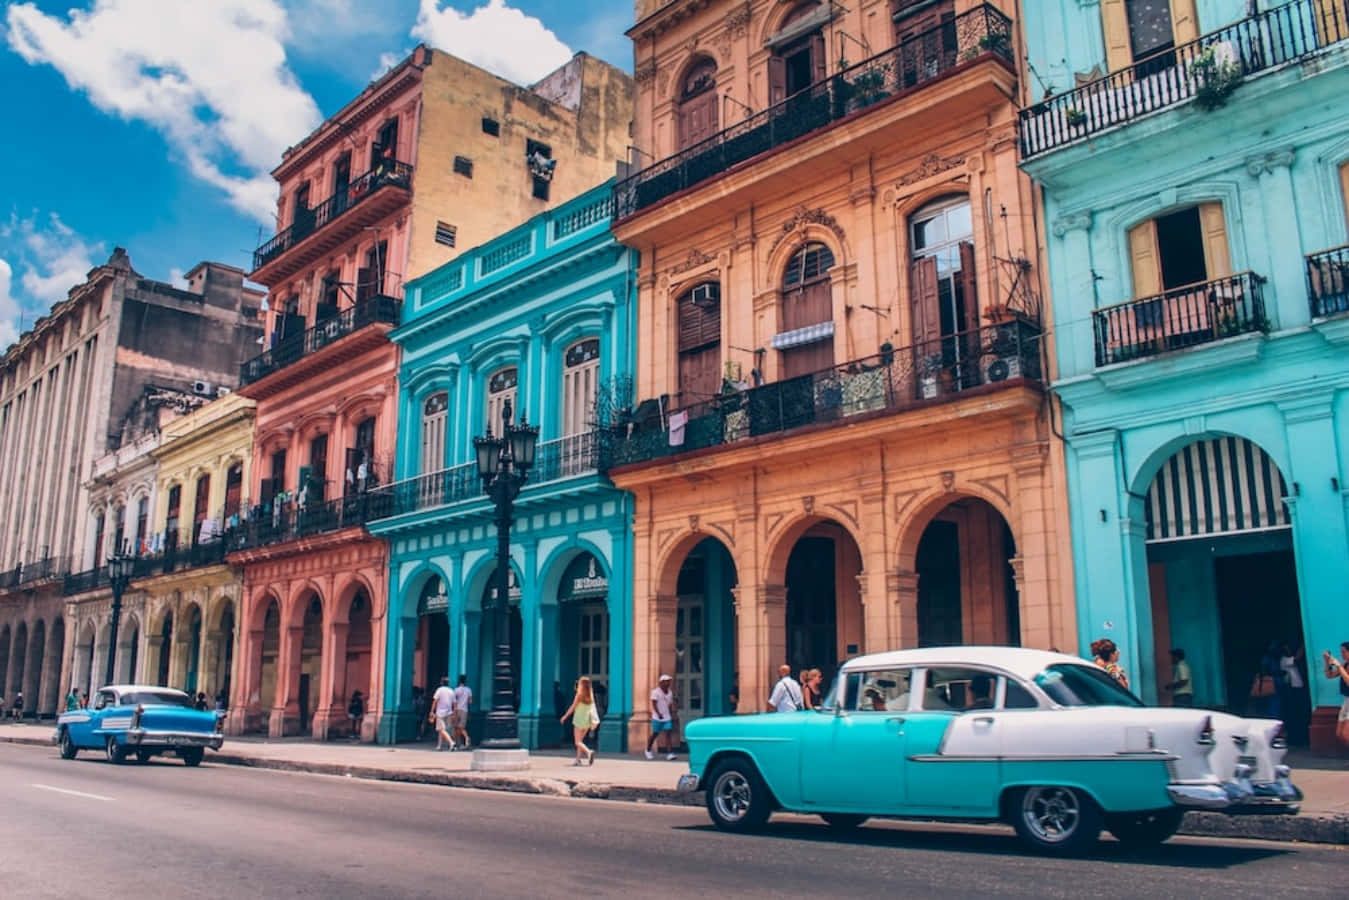 Enjoy the Caribbean vibes in Cuba